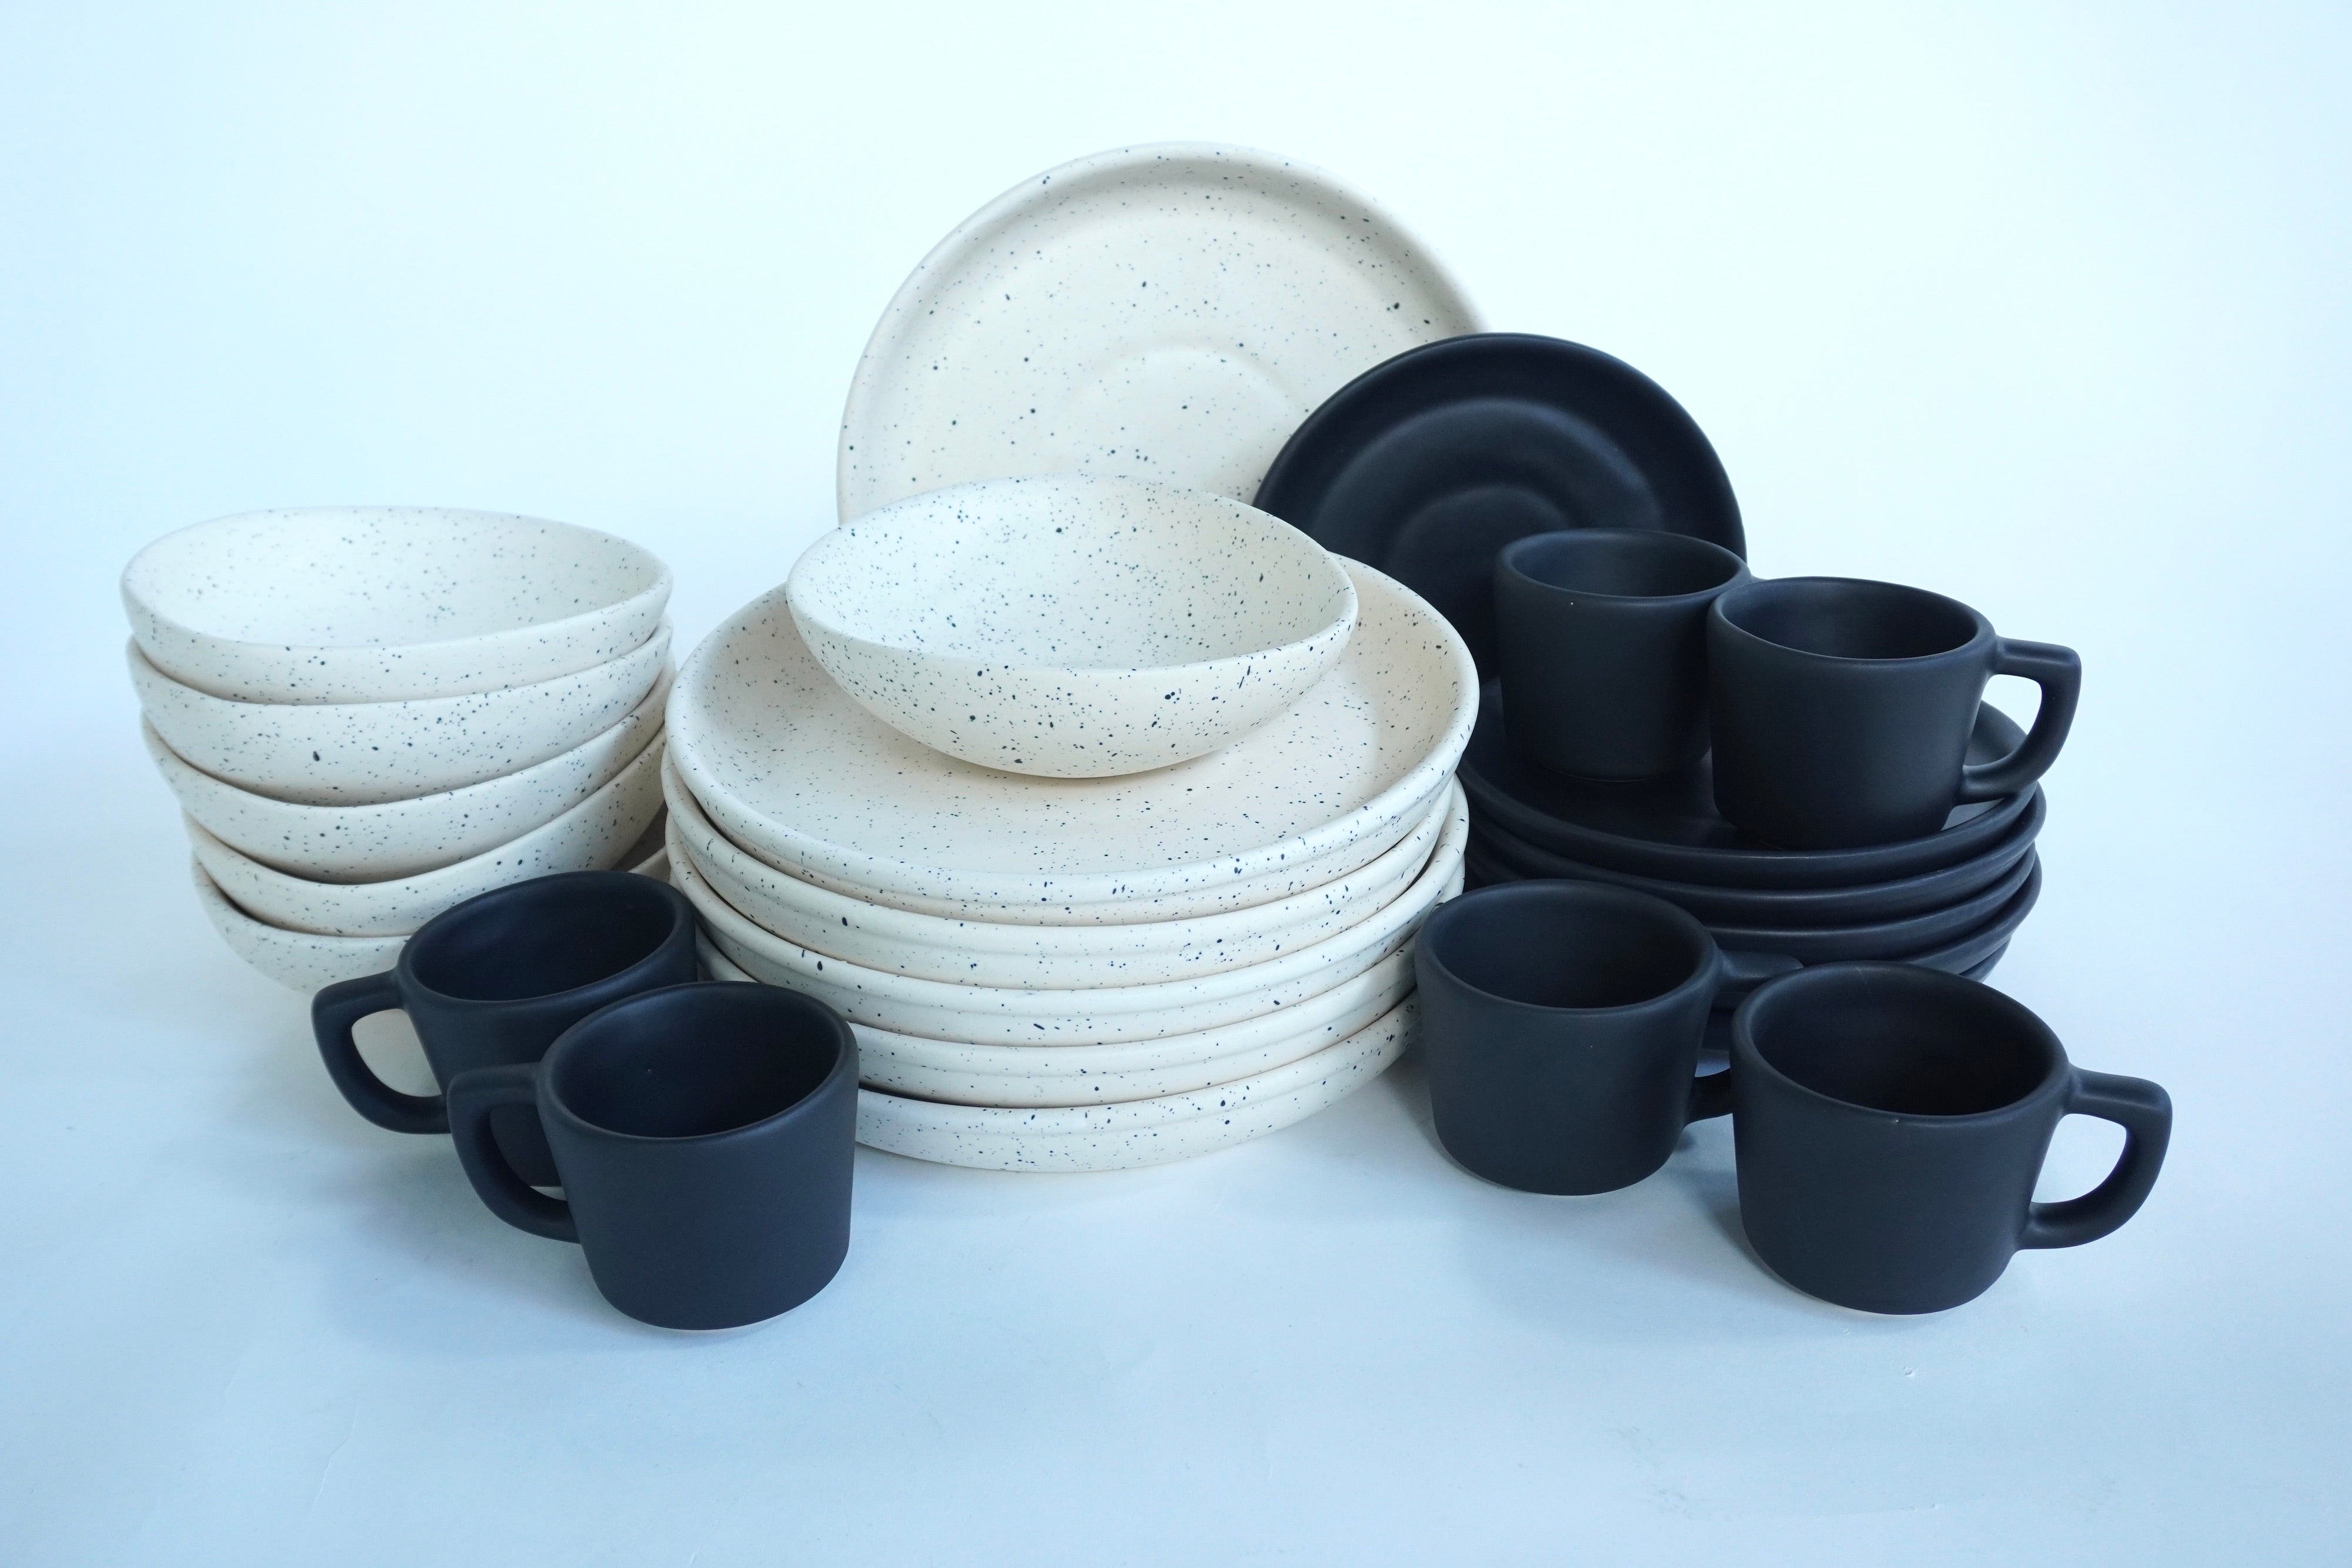 Mixto Tulum & Black out mate (con bowls irregulares) | Set de vajilla línea clásica para 6 personas